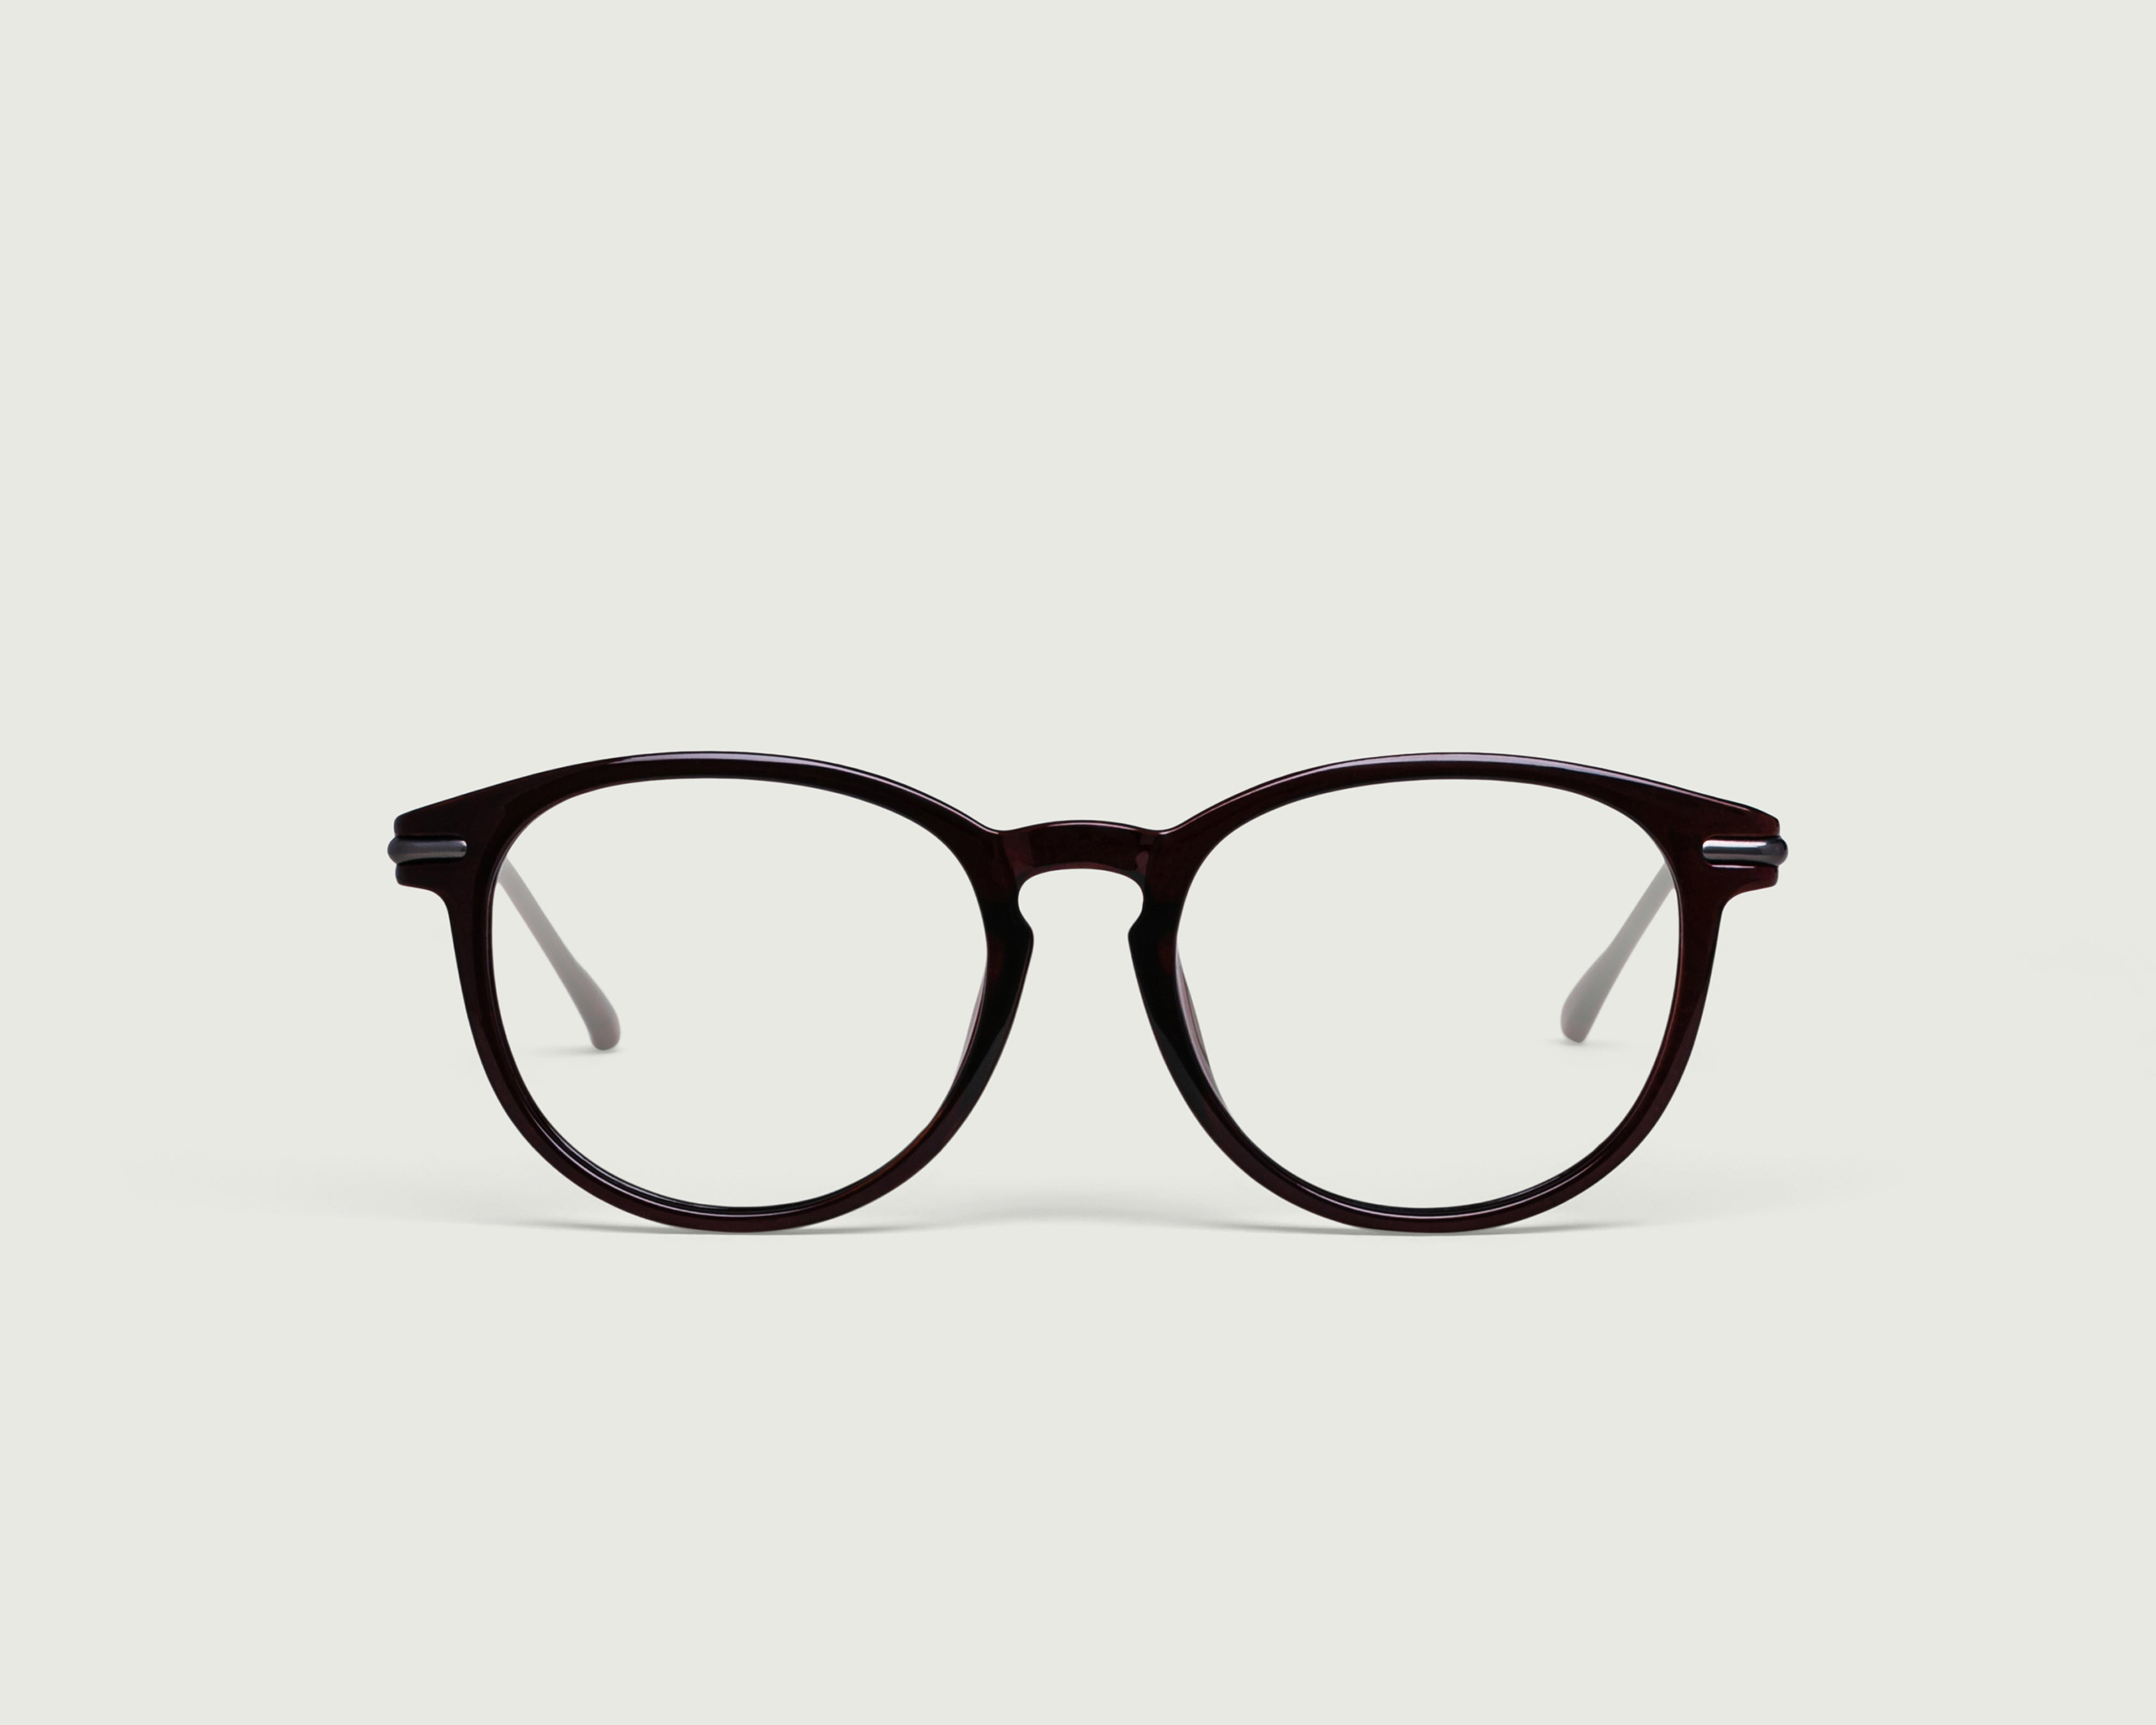 Mahogany::Morgan Eyeglasses round red plastic front